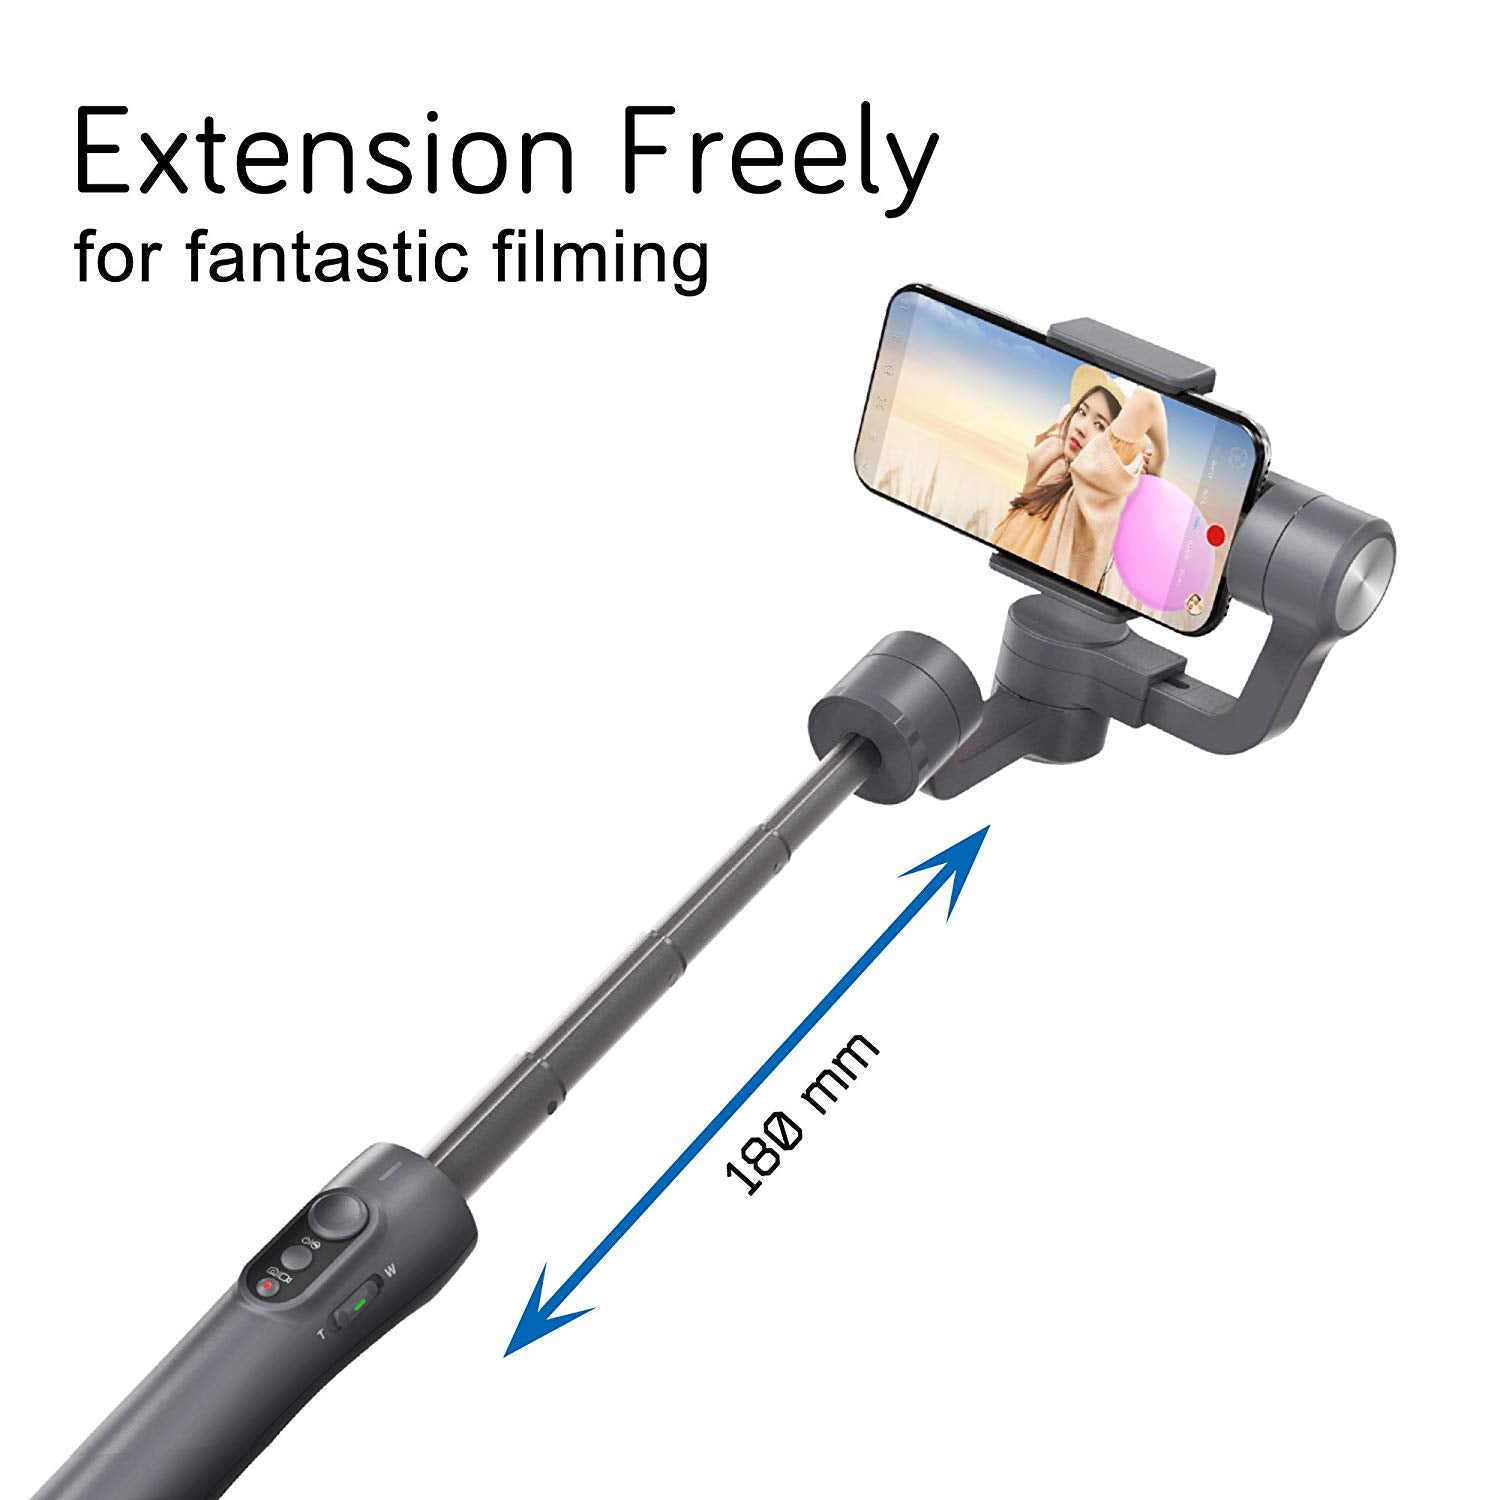 FeiyuTech Vimble 2 Handheld Smartphone Gimbal 3-Axis Stabilizer selfie stick